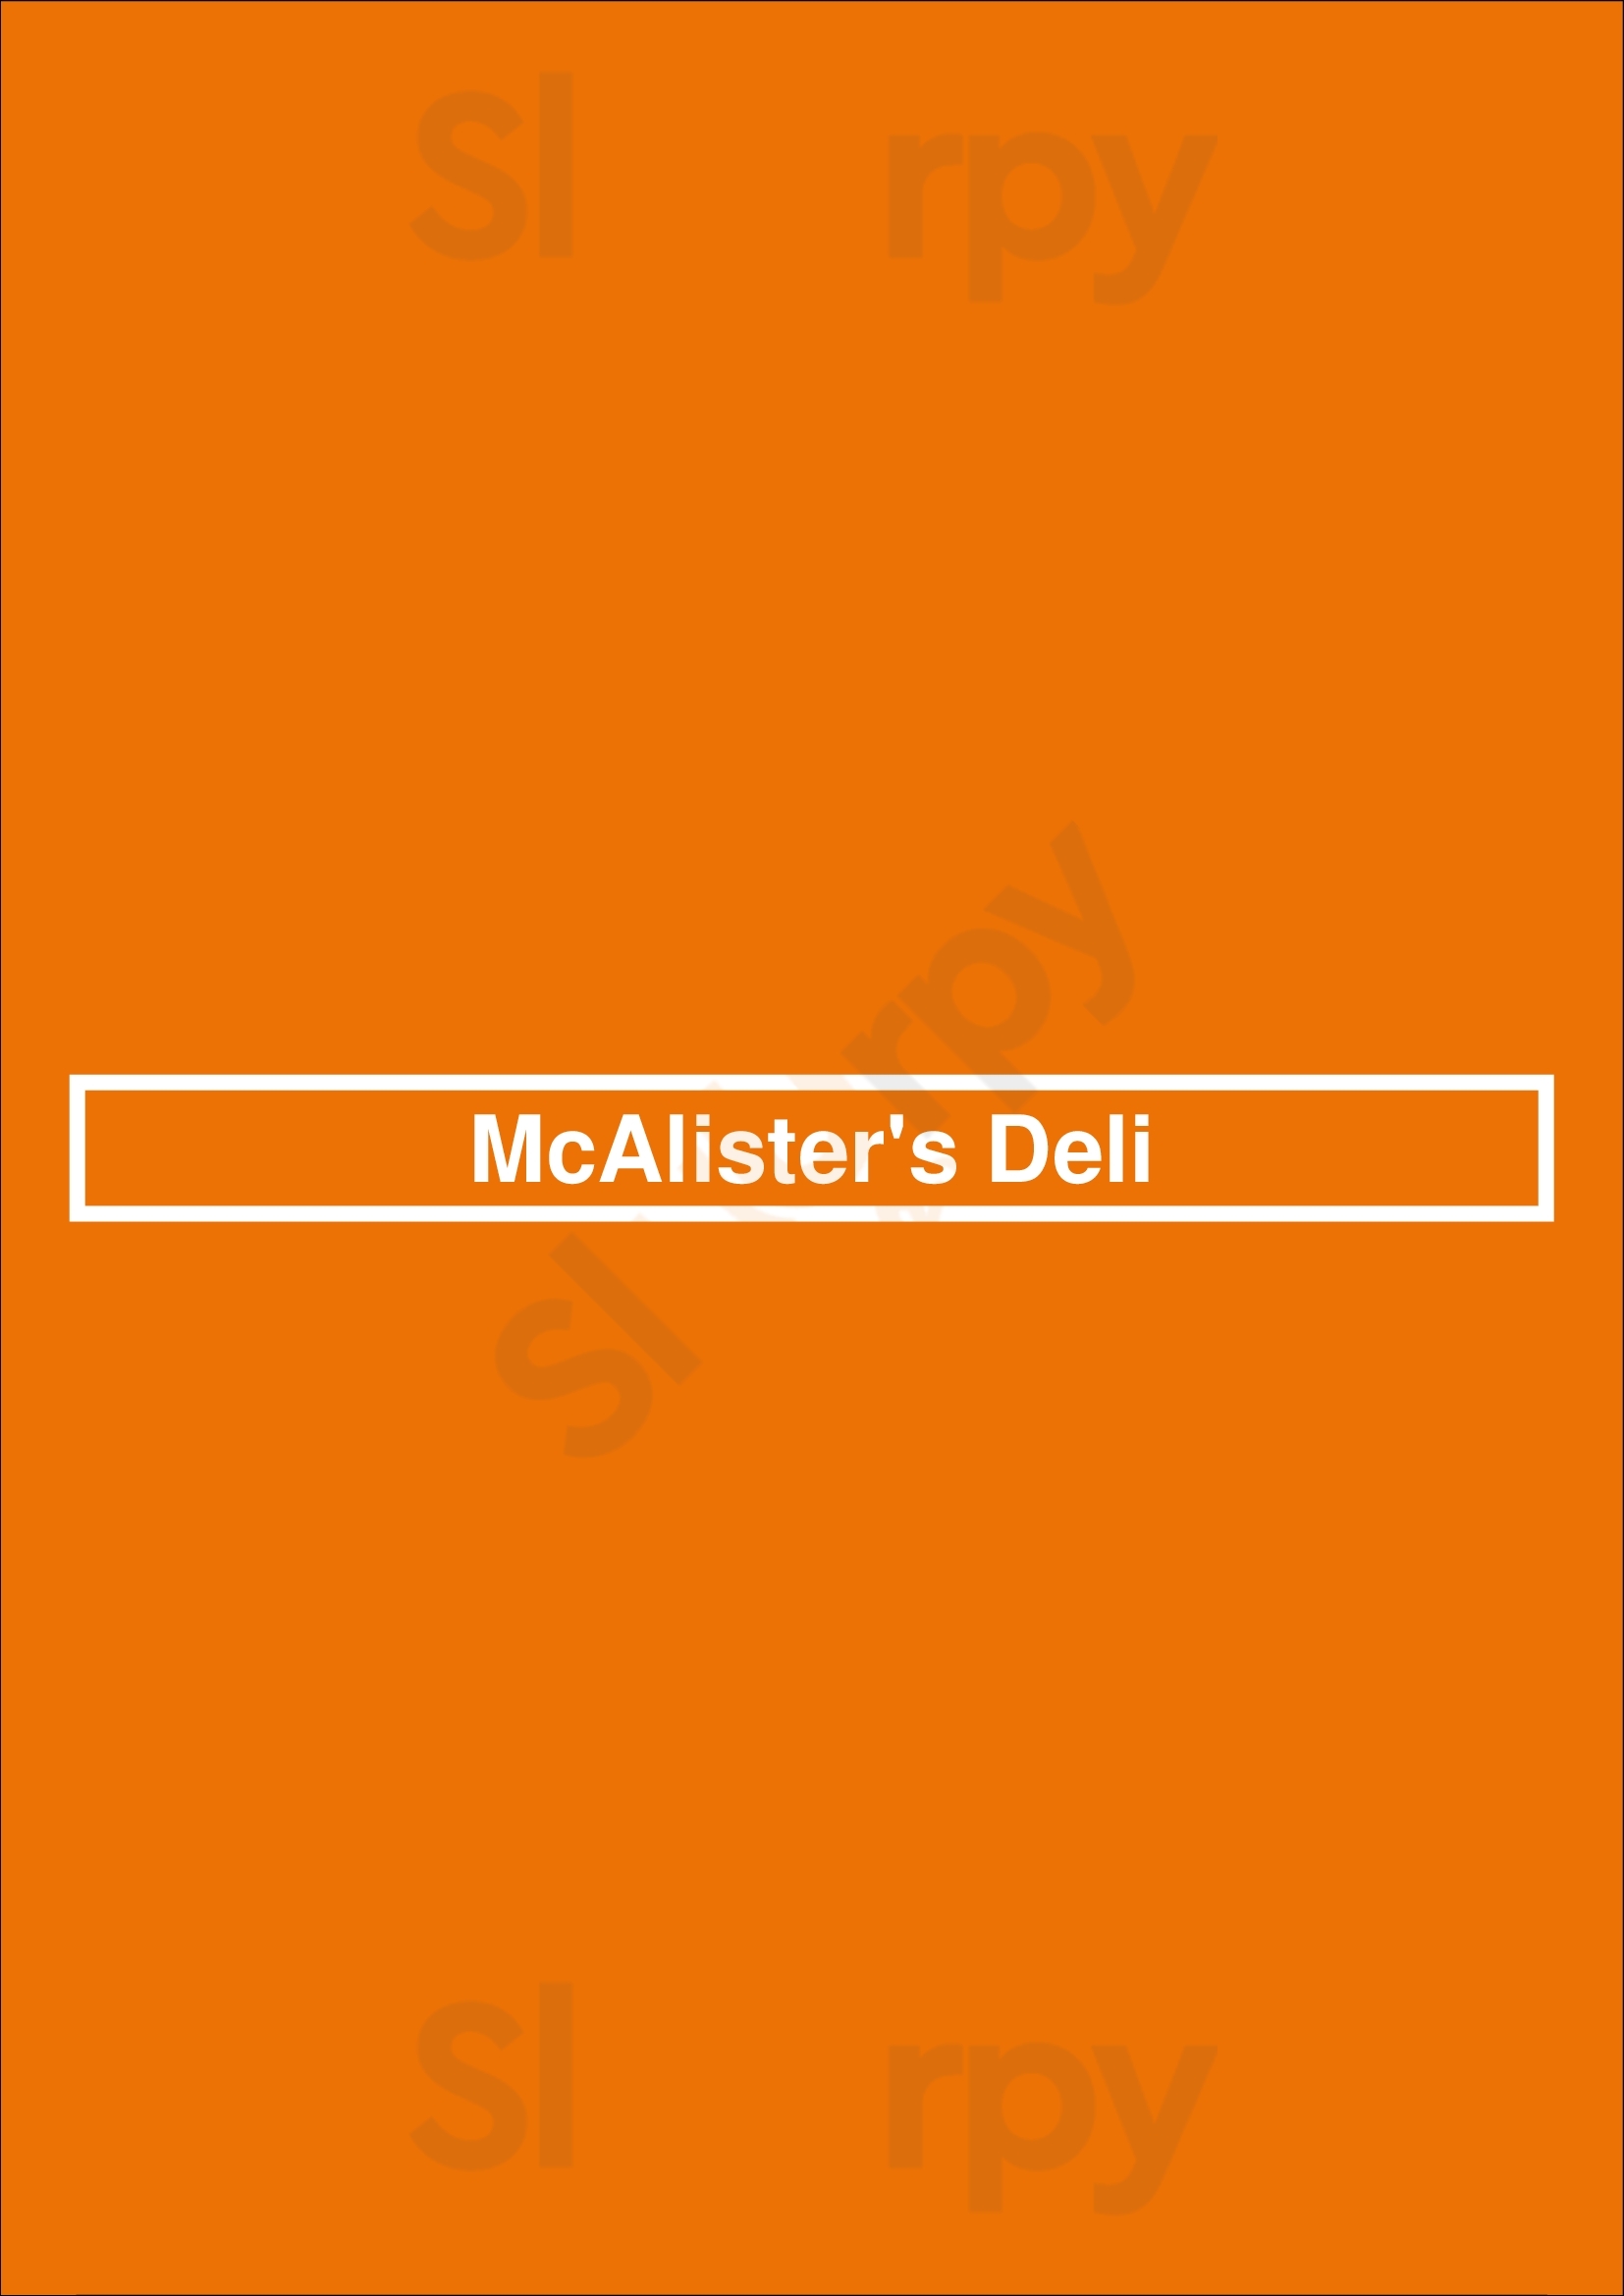 Mcalister's Deli Knoxville Menu - 1